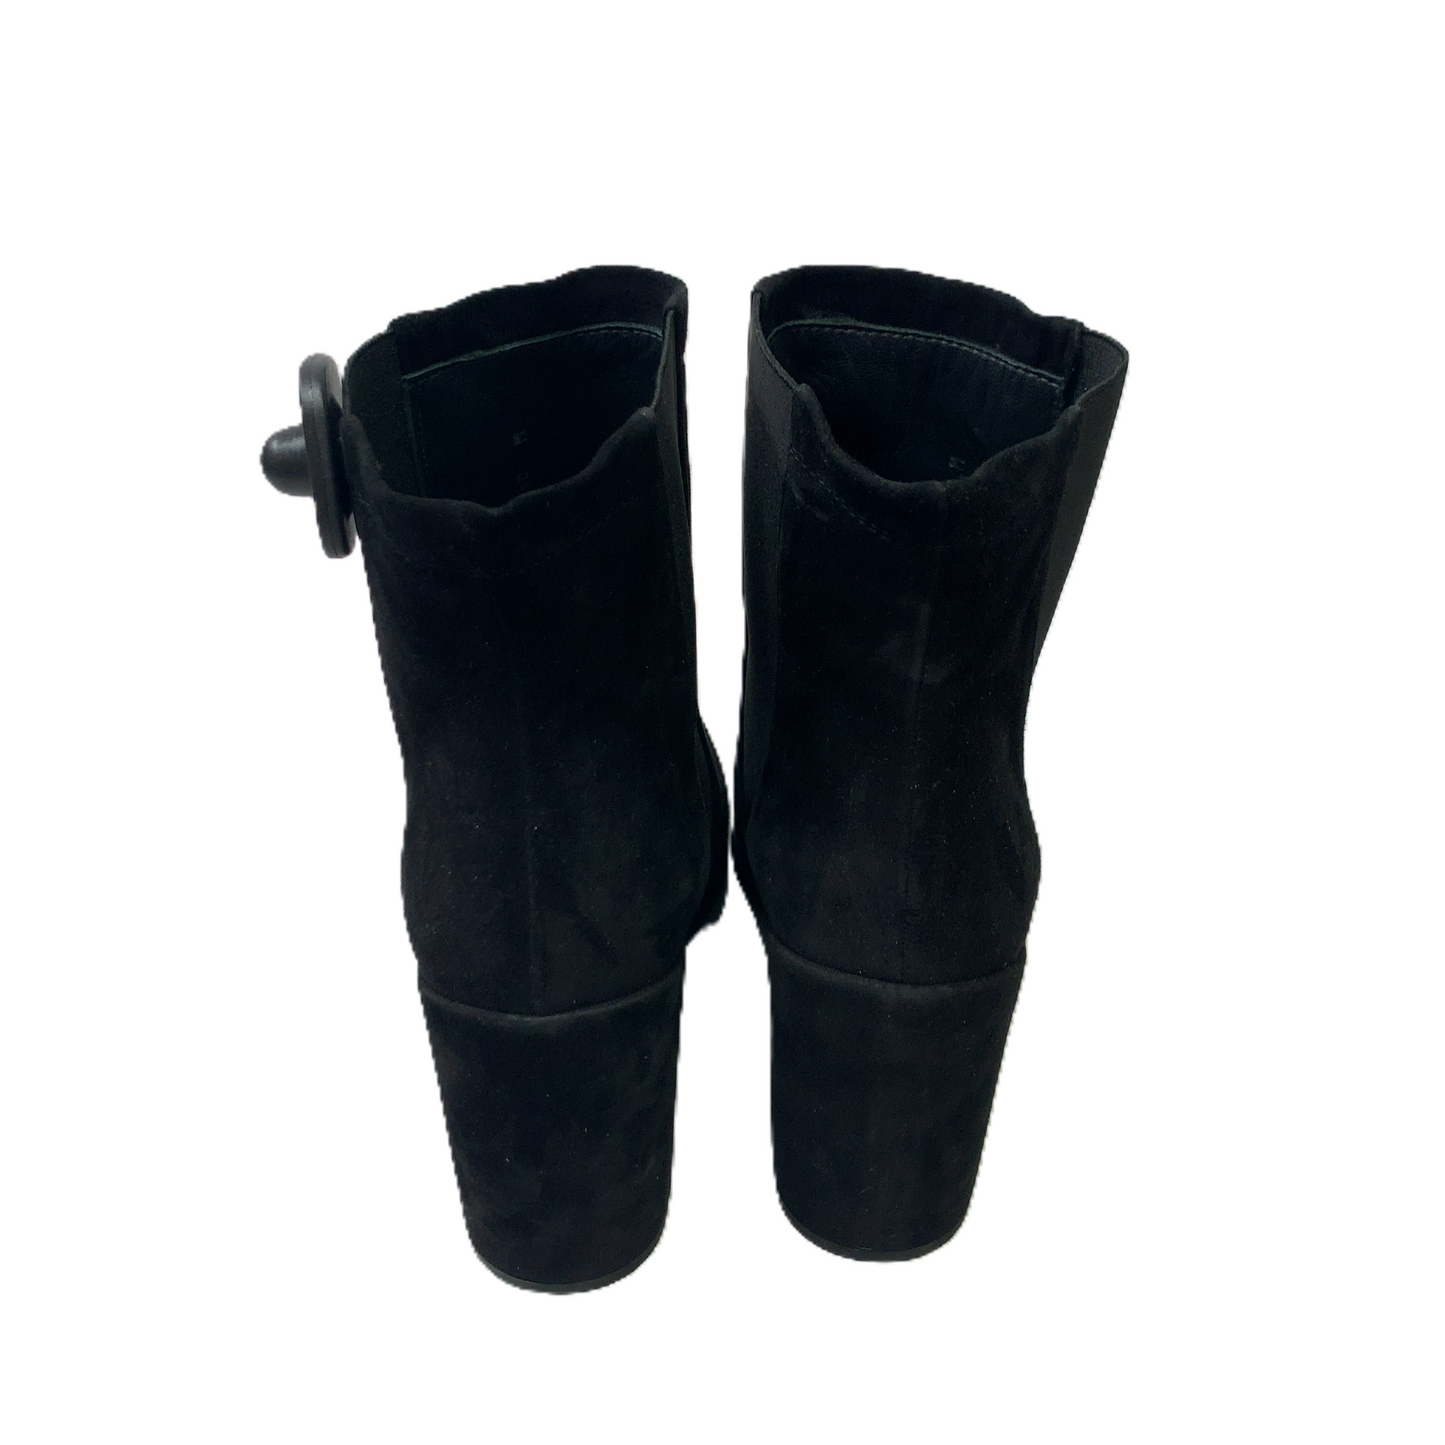 Black  Boots Ankle Heels By Stuart Weitzman  Size: 10